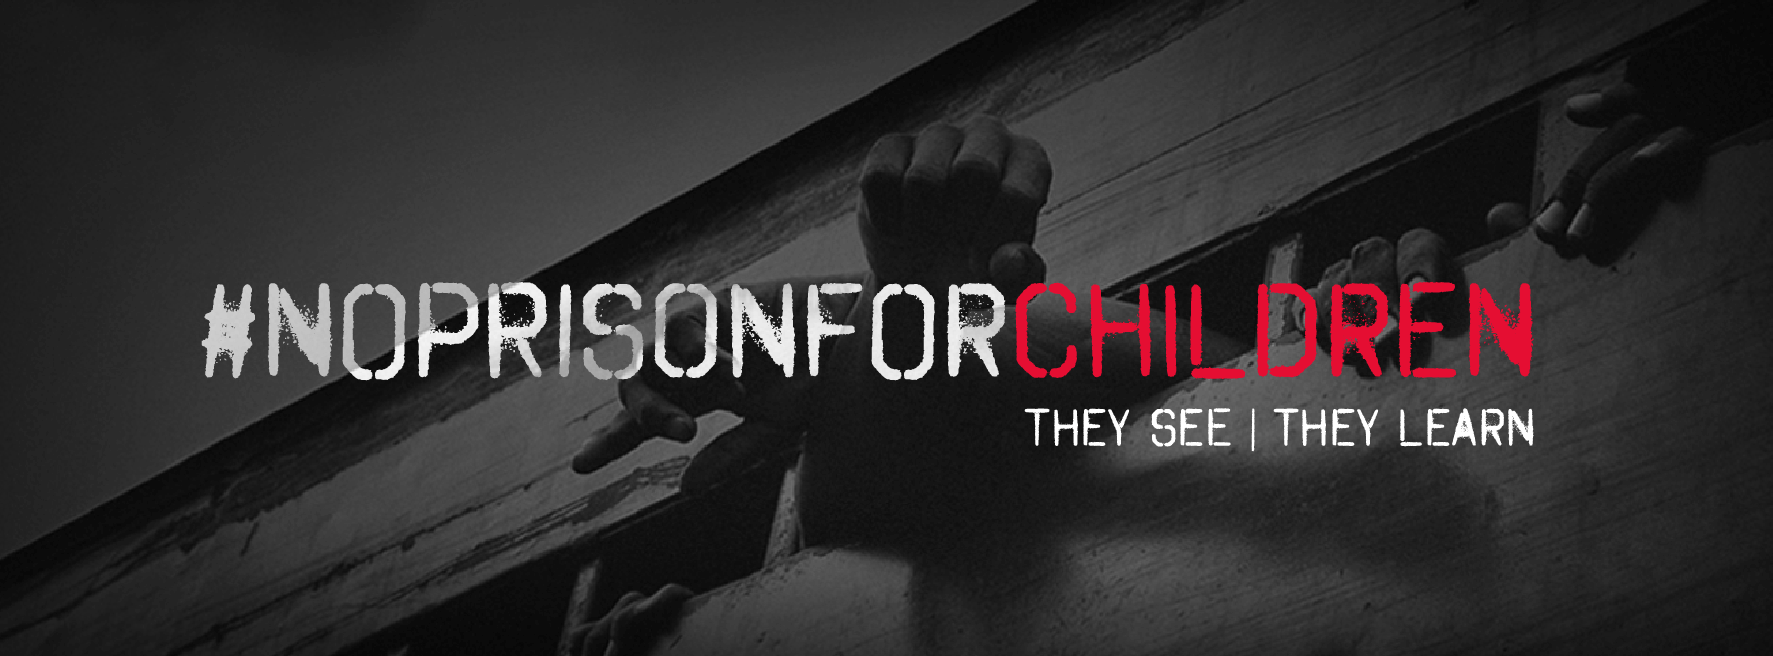 No Prison for Children | Child Rights Organization | NGO in India